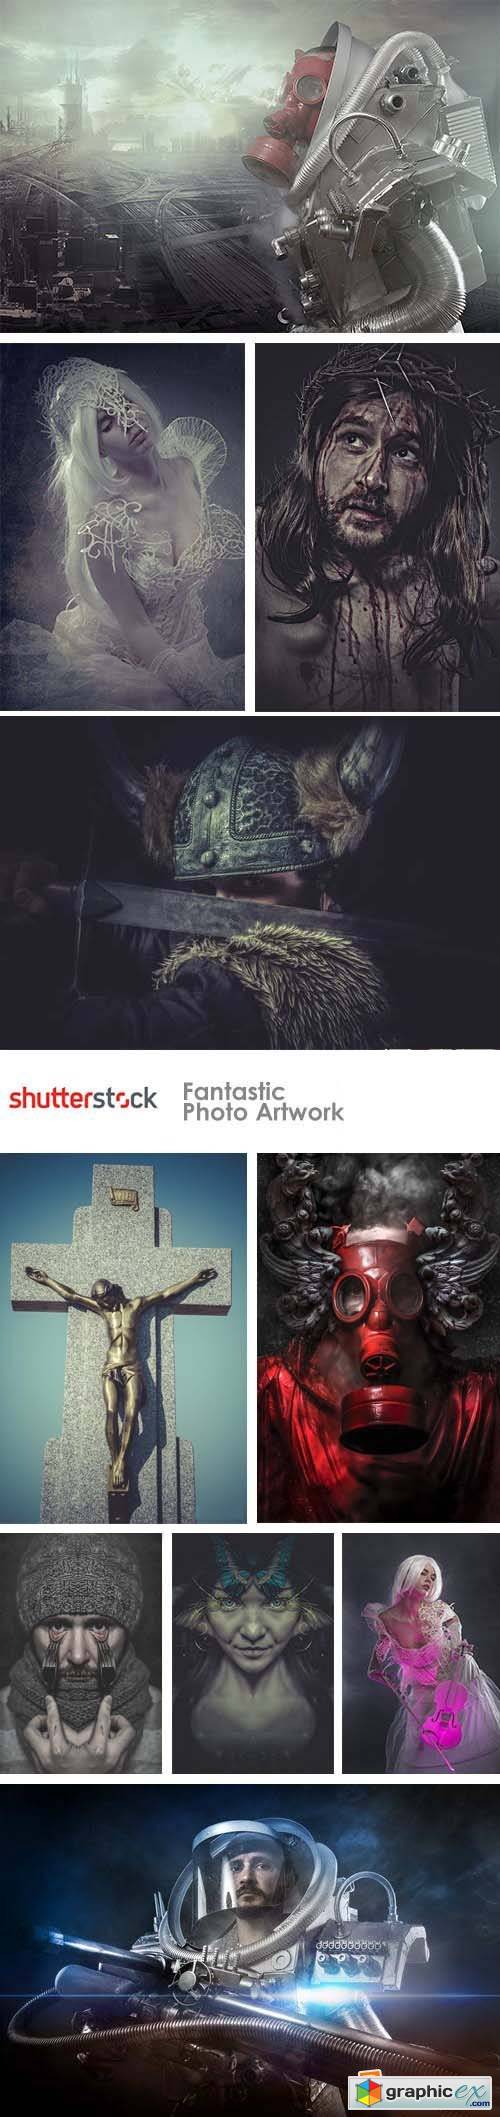 Fantastic Photo Artworks 25xJPG